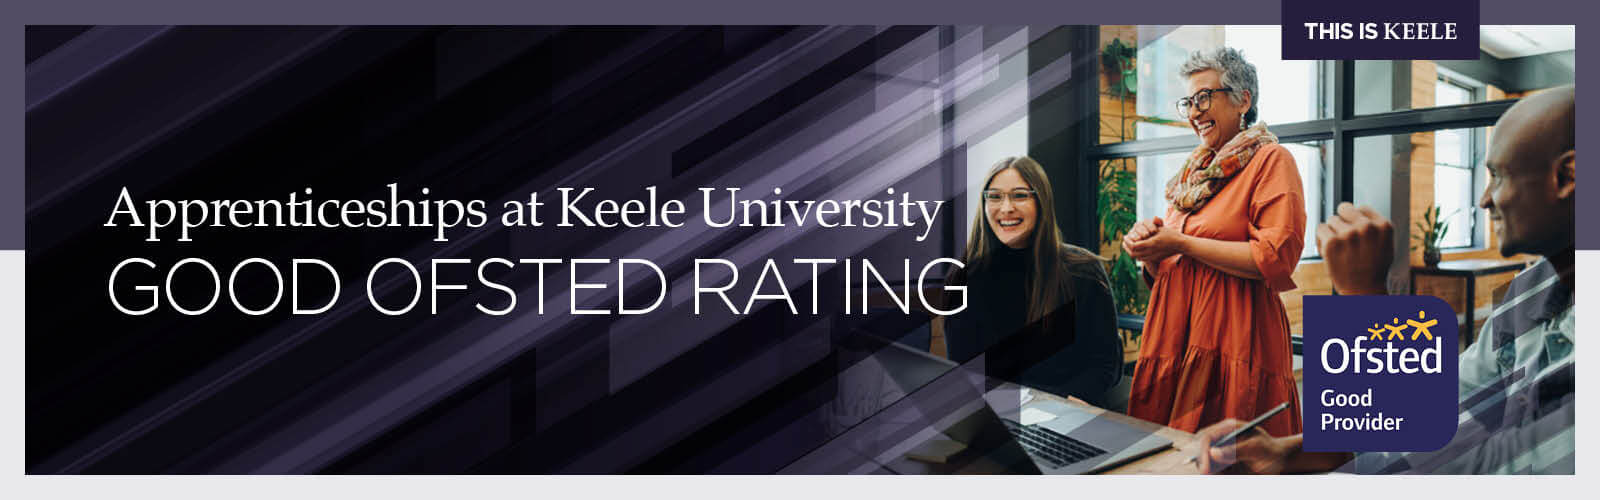 Keele University Apprenticeships